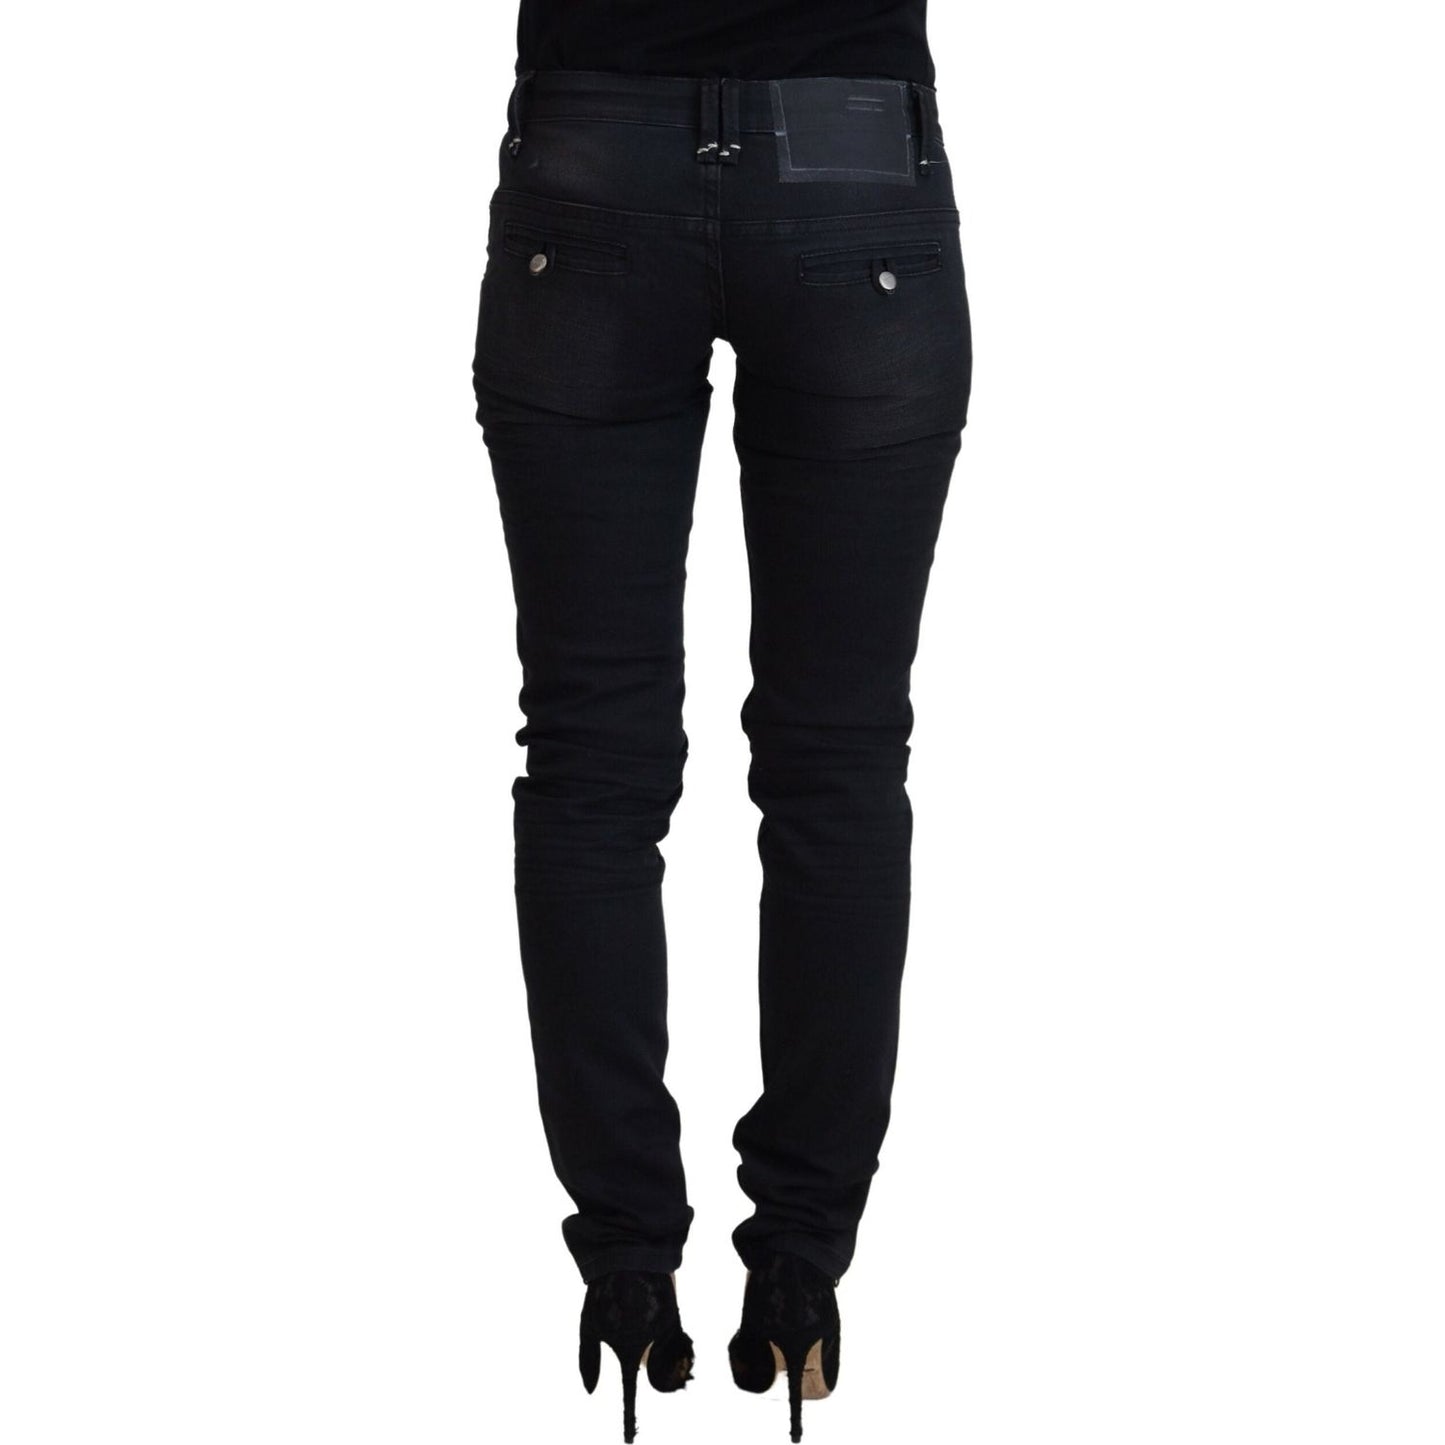 Acht Sleek Black Washed Low Waist Skinny Jeans black-washed-cotton-skinny-women-casual-denim-jeans